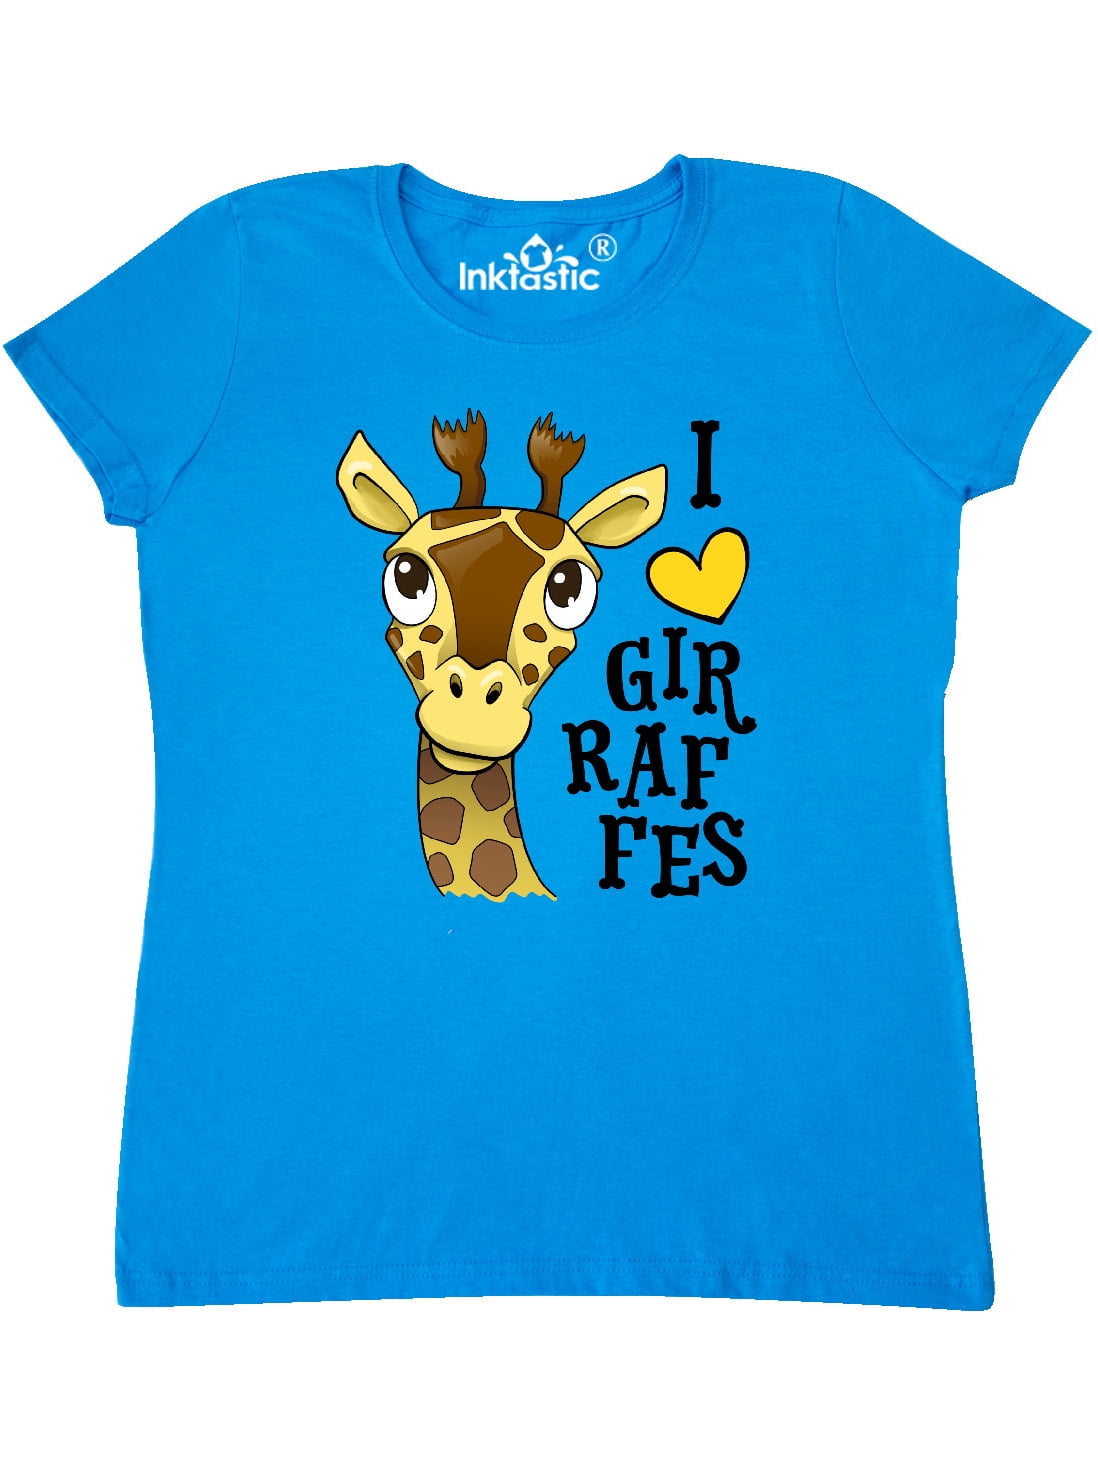 INKtastic - I love Giraffes Women's T-Shirt - Walmart.com - Walmart.com